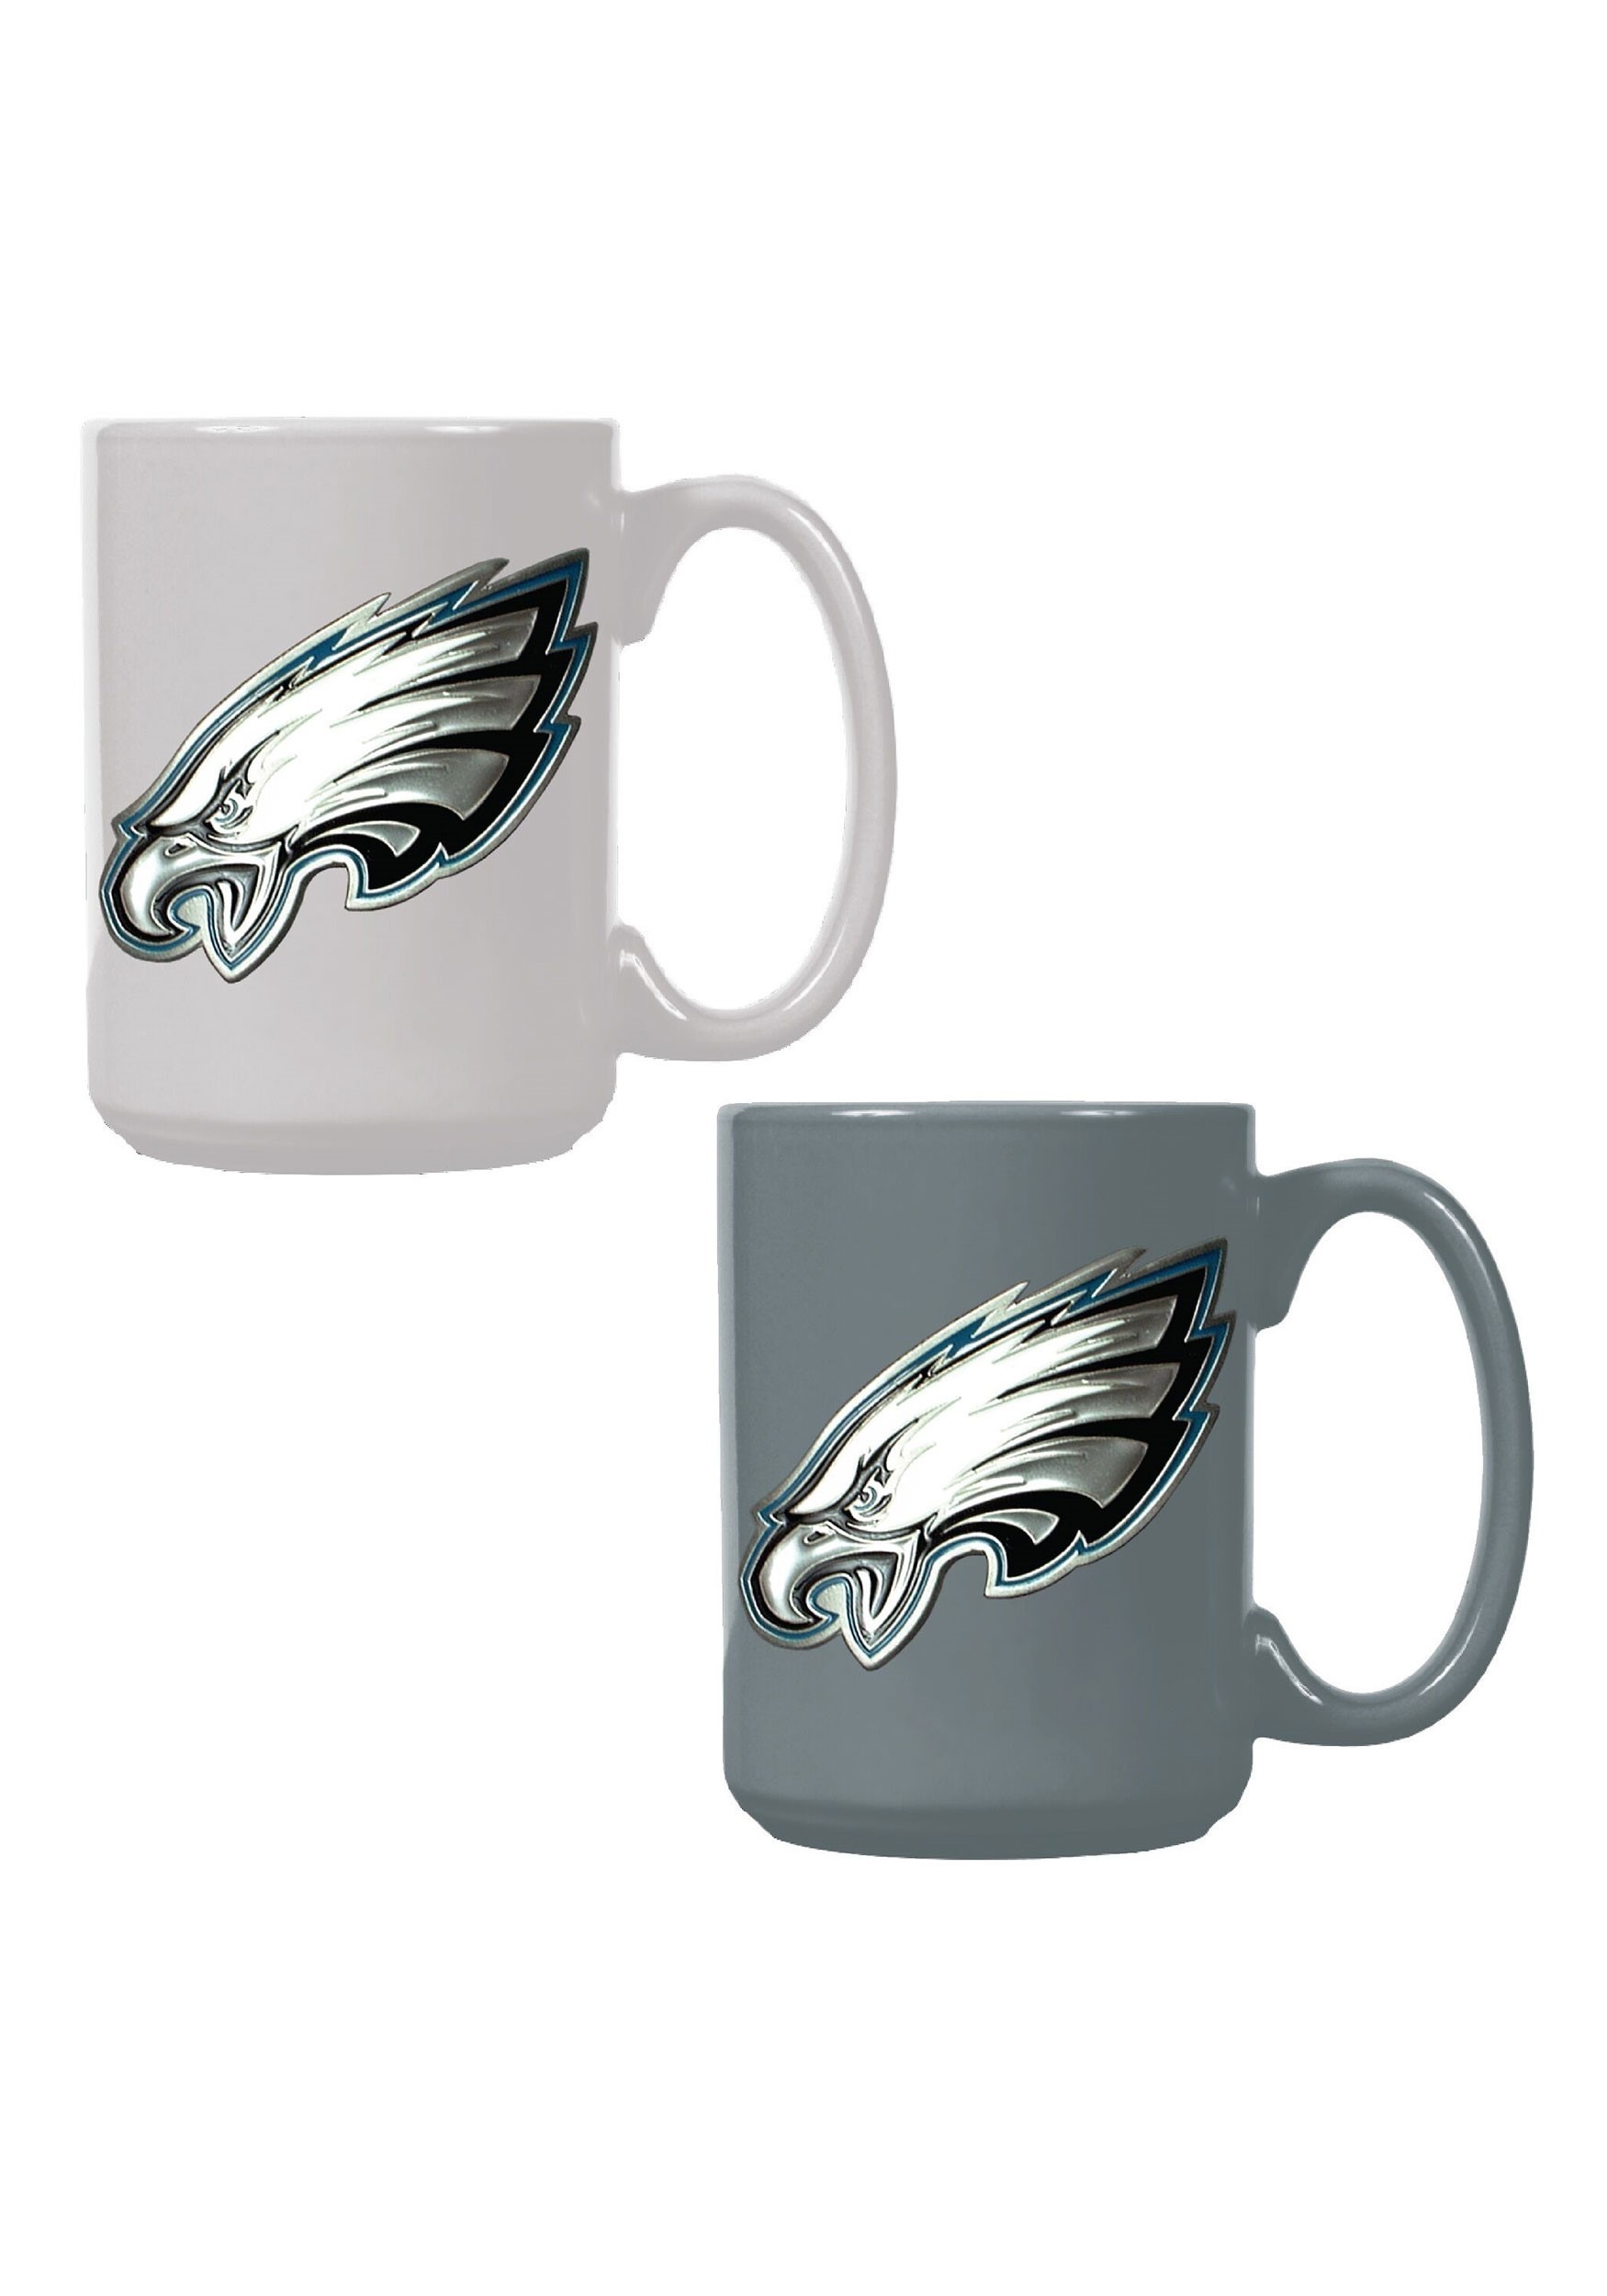 Memory Company Seattle Seahawks 15oz Black Ceramic Coffee Mug